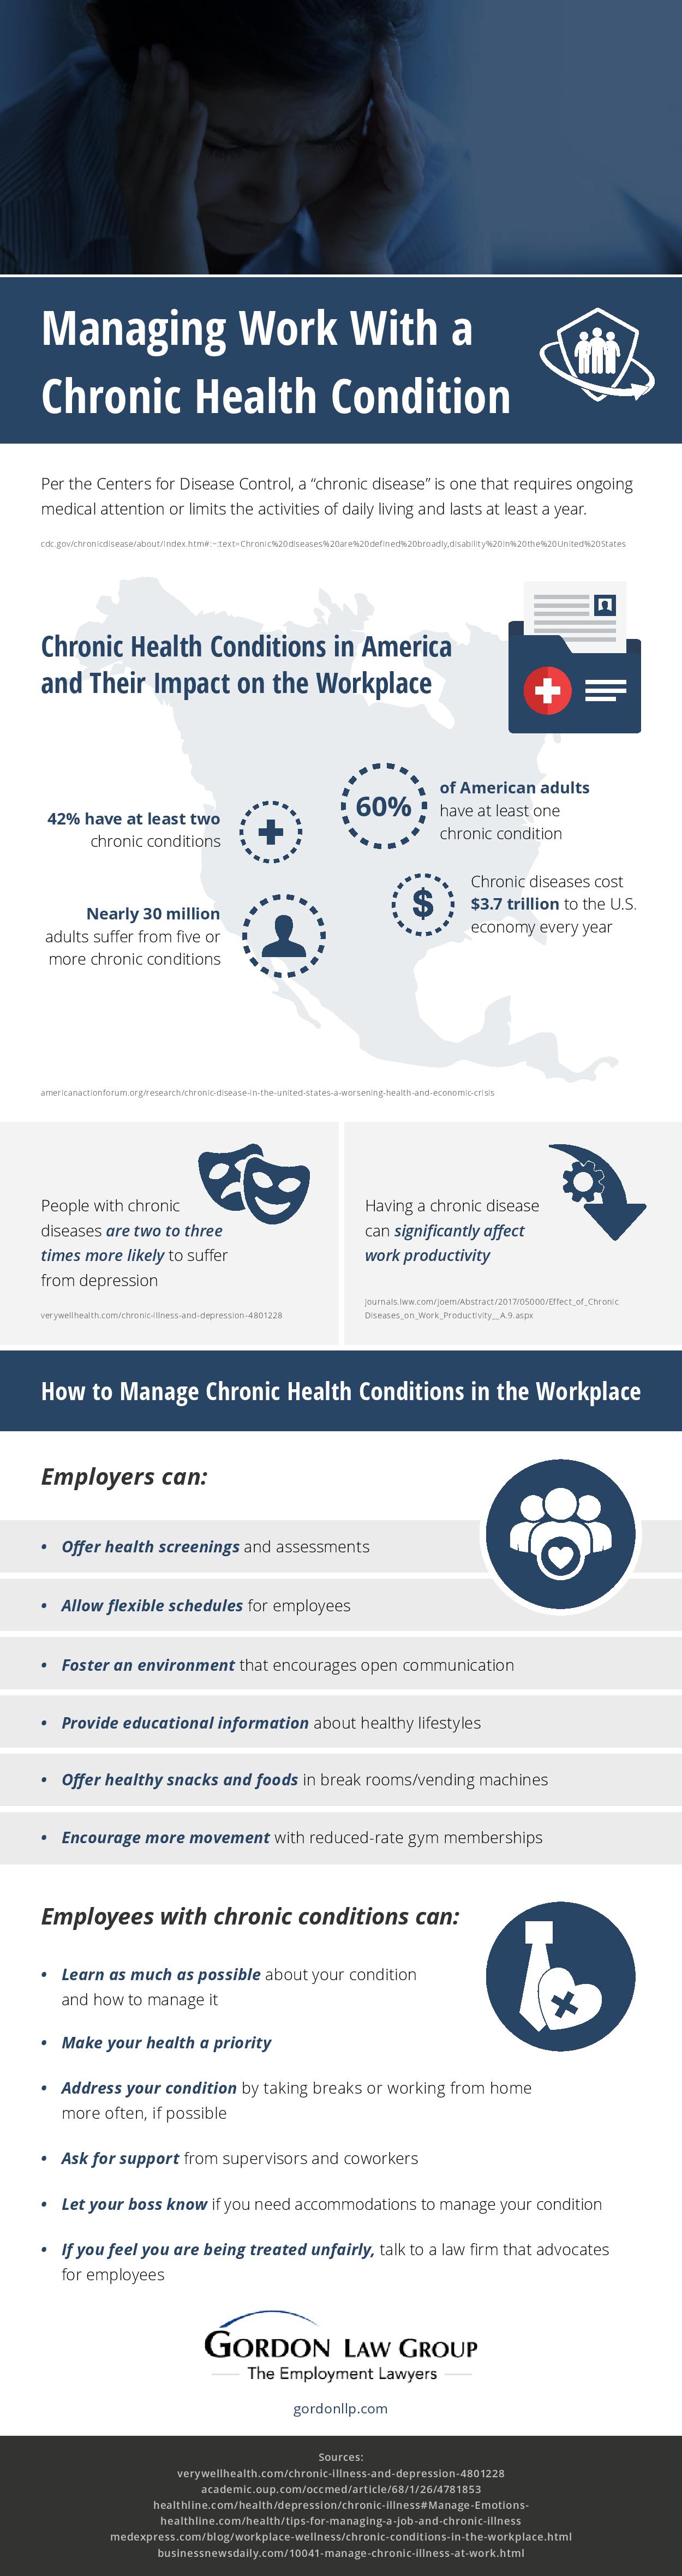 Chronic illness management jobs